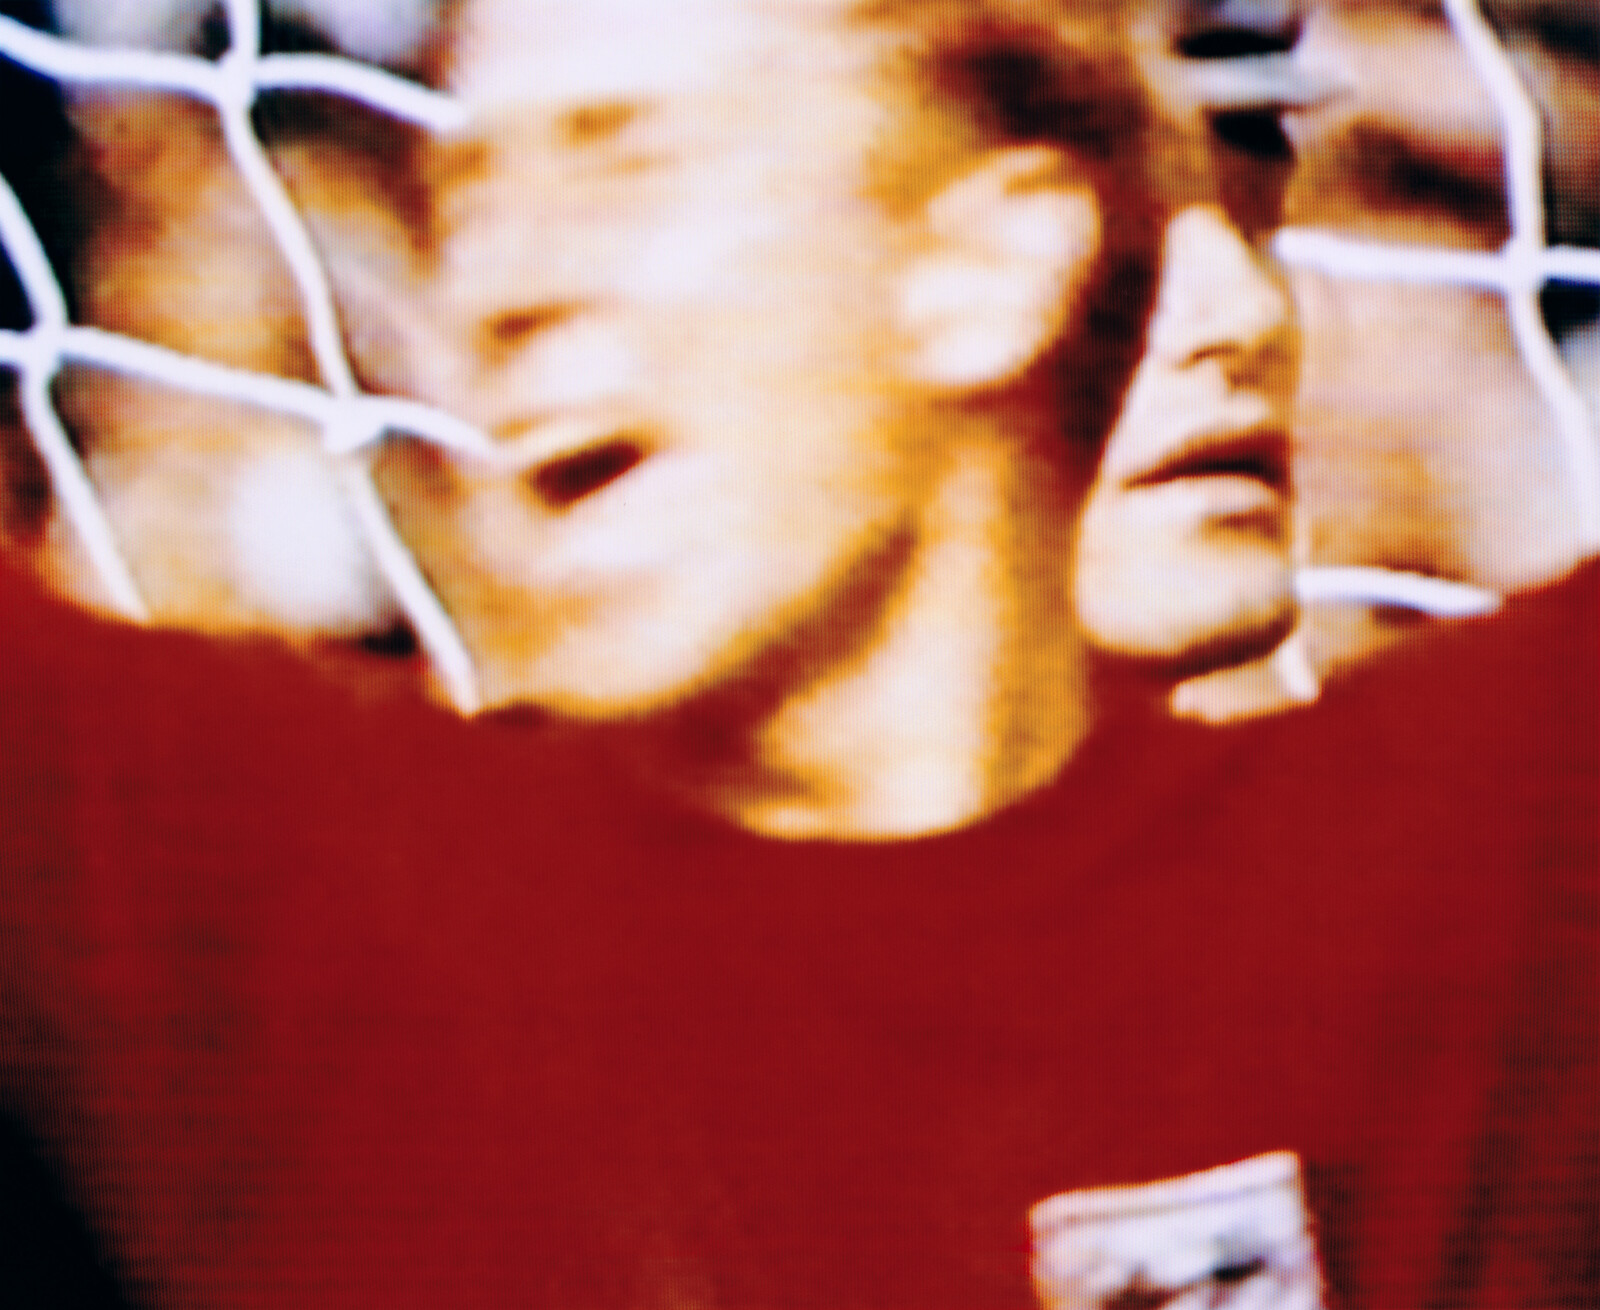 Charlton and Tilkowski England v West Germany 4-2 AET (Final) 30.06.1966,Wembley, London, England   - Robert Davies